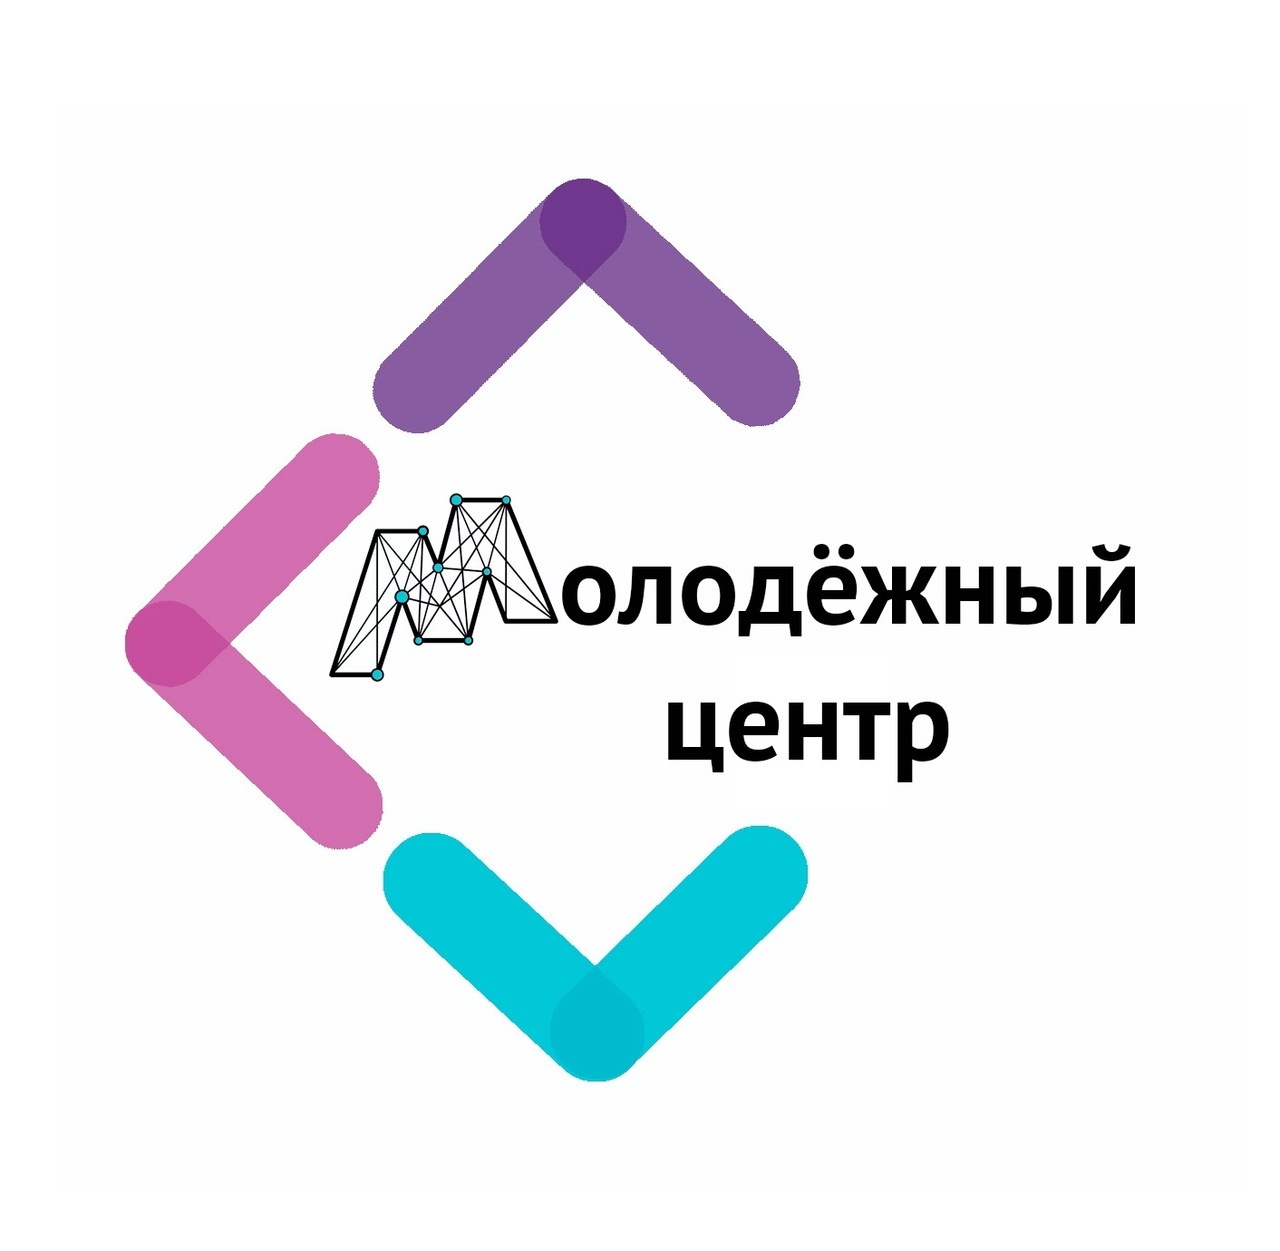 Логотип МБУ "Молодежный центр"